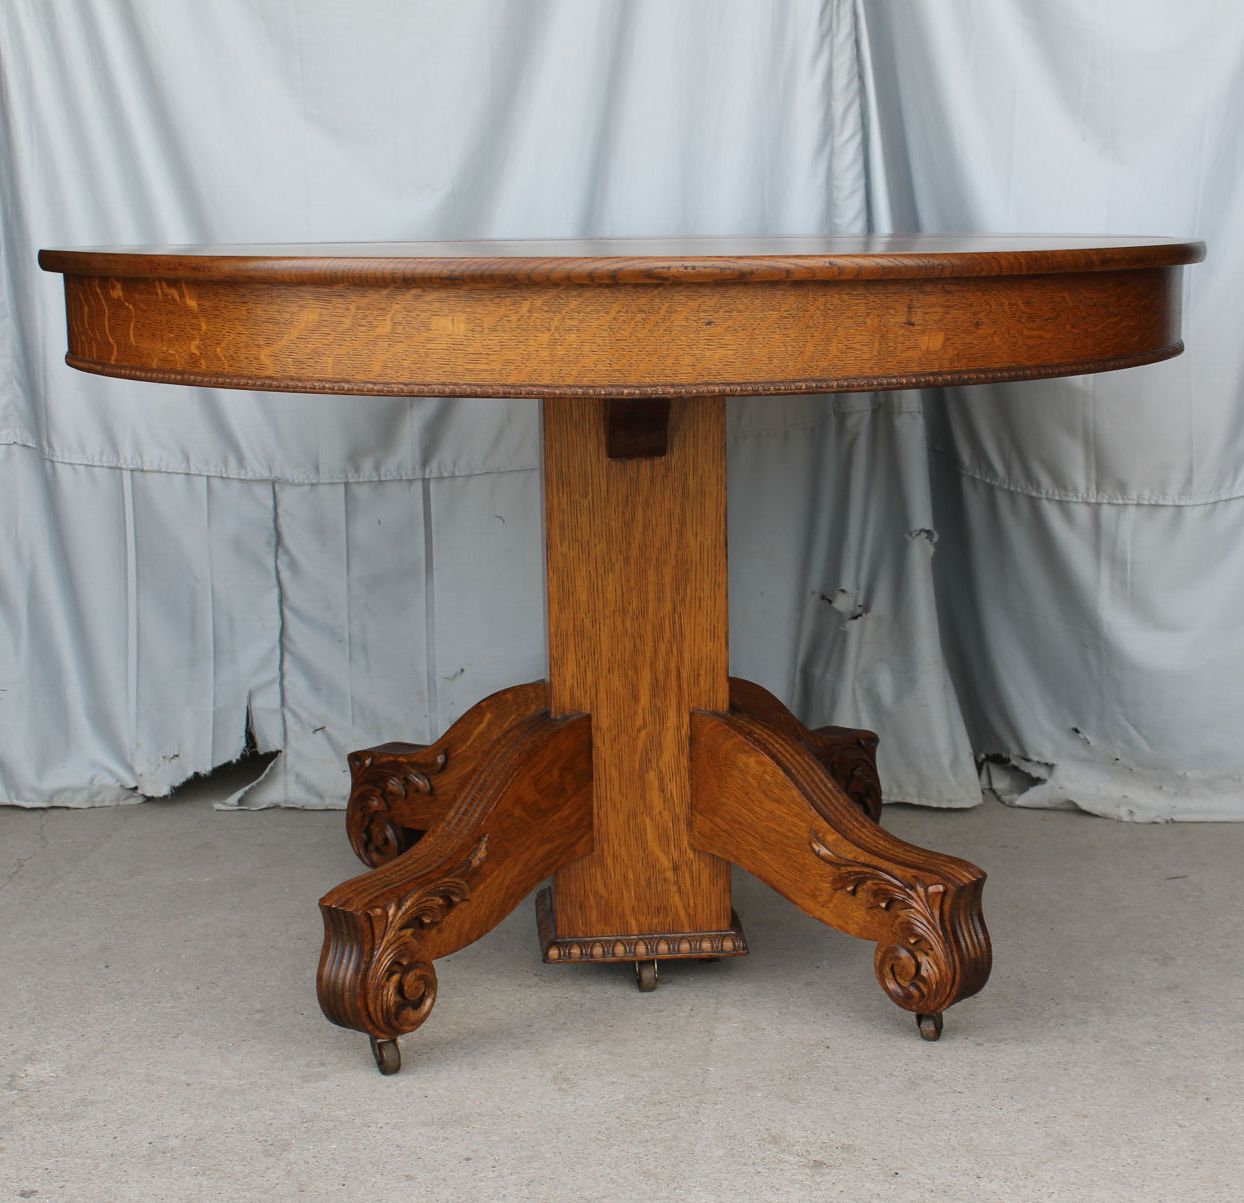 Bargain John's Antiques » Blog Archive Antique Round Oak Regarding Well Known Antique Oak Dining Tables (View 9 of 15)